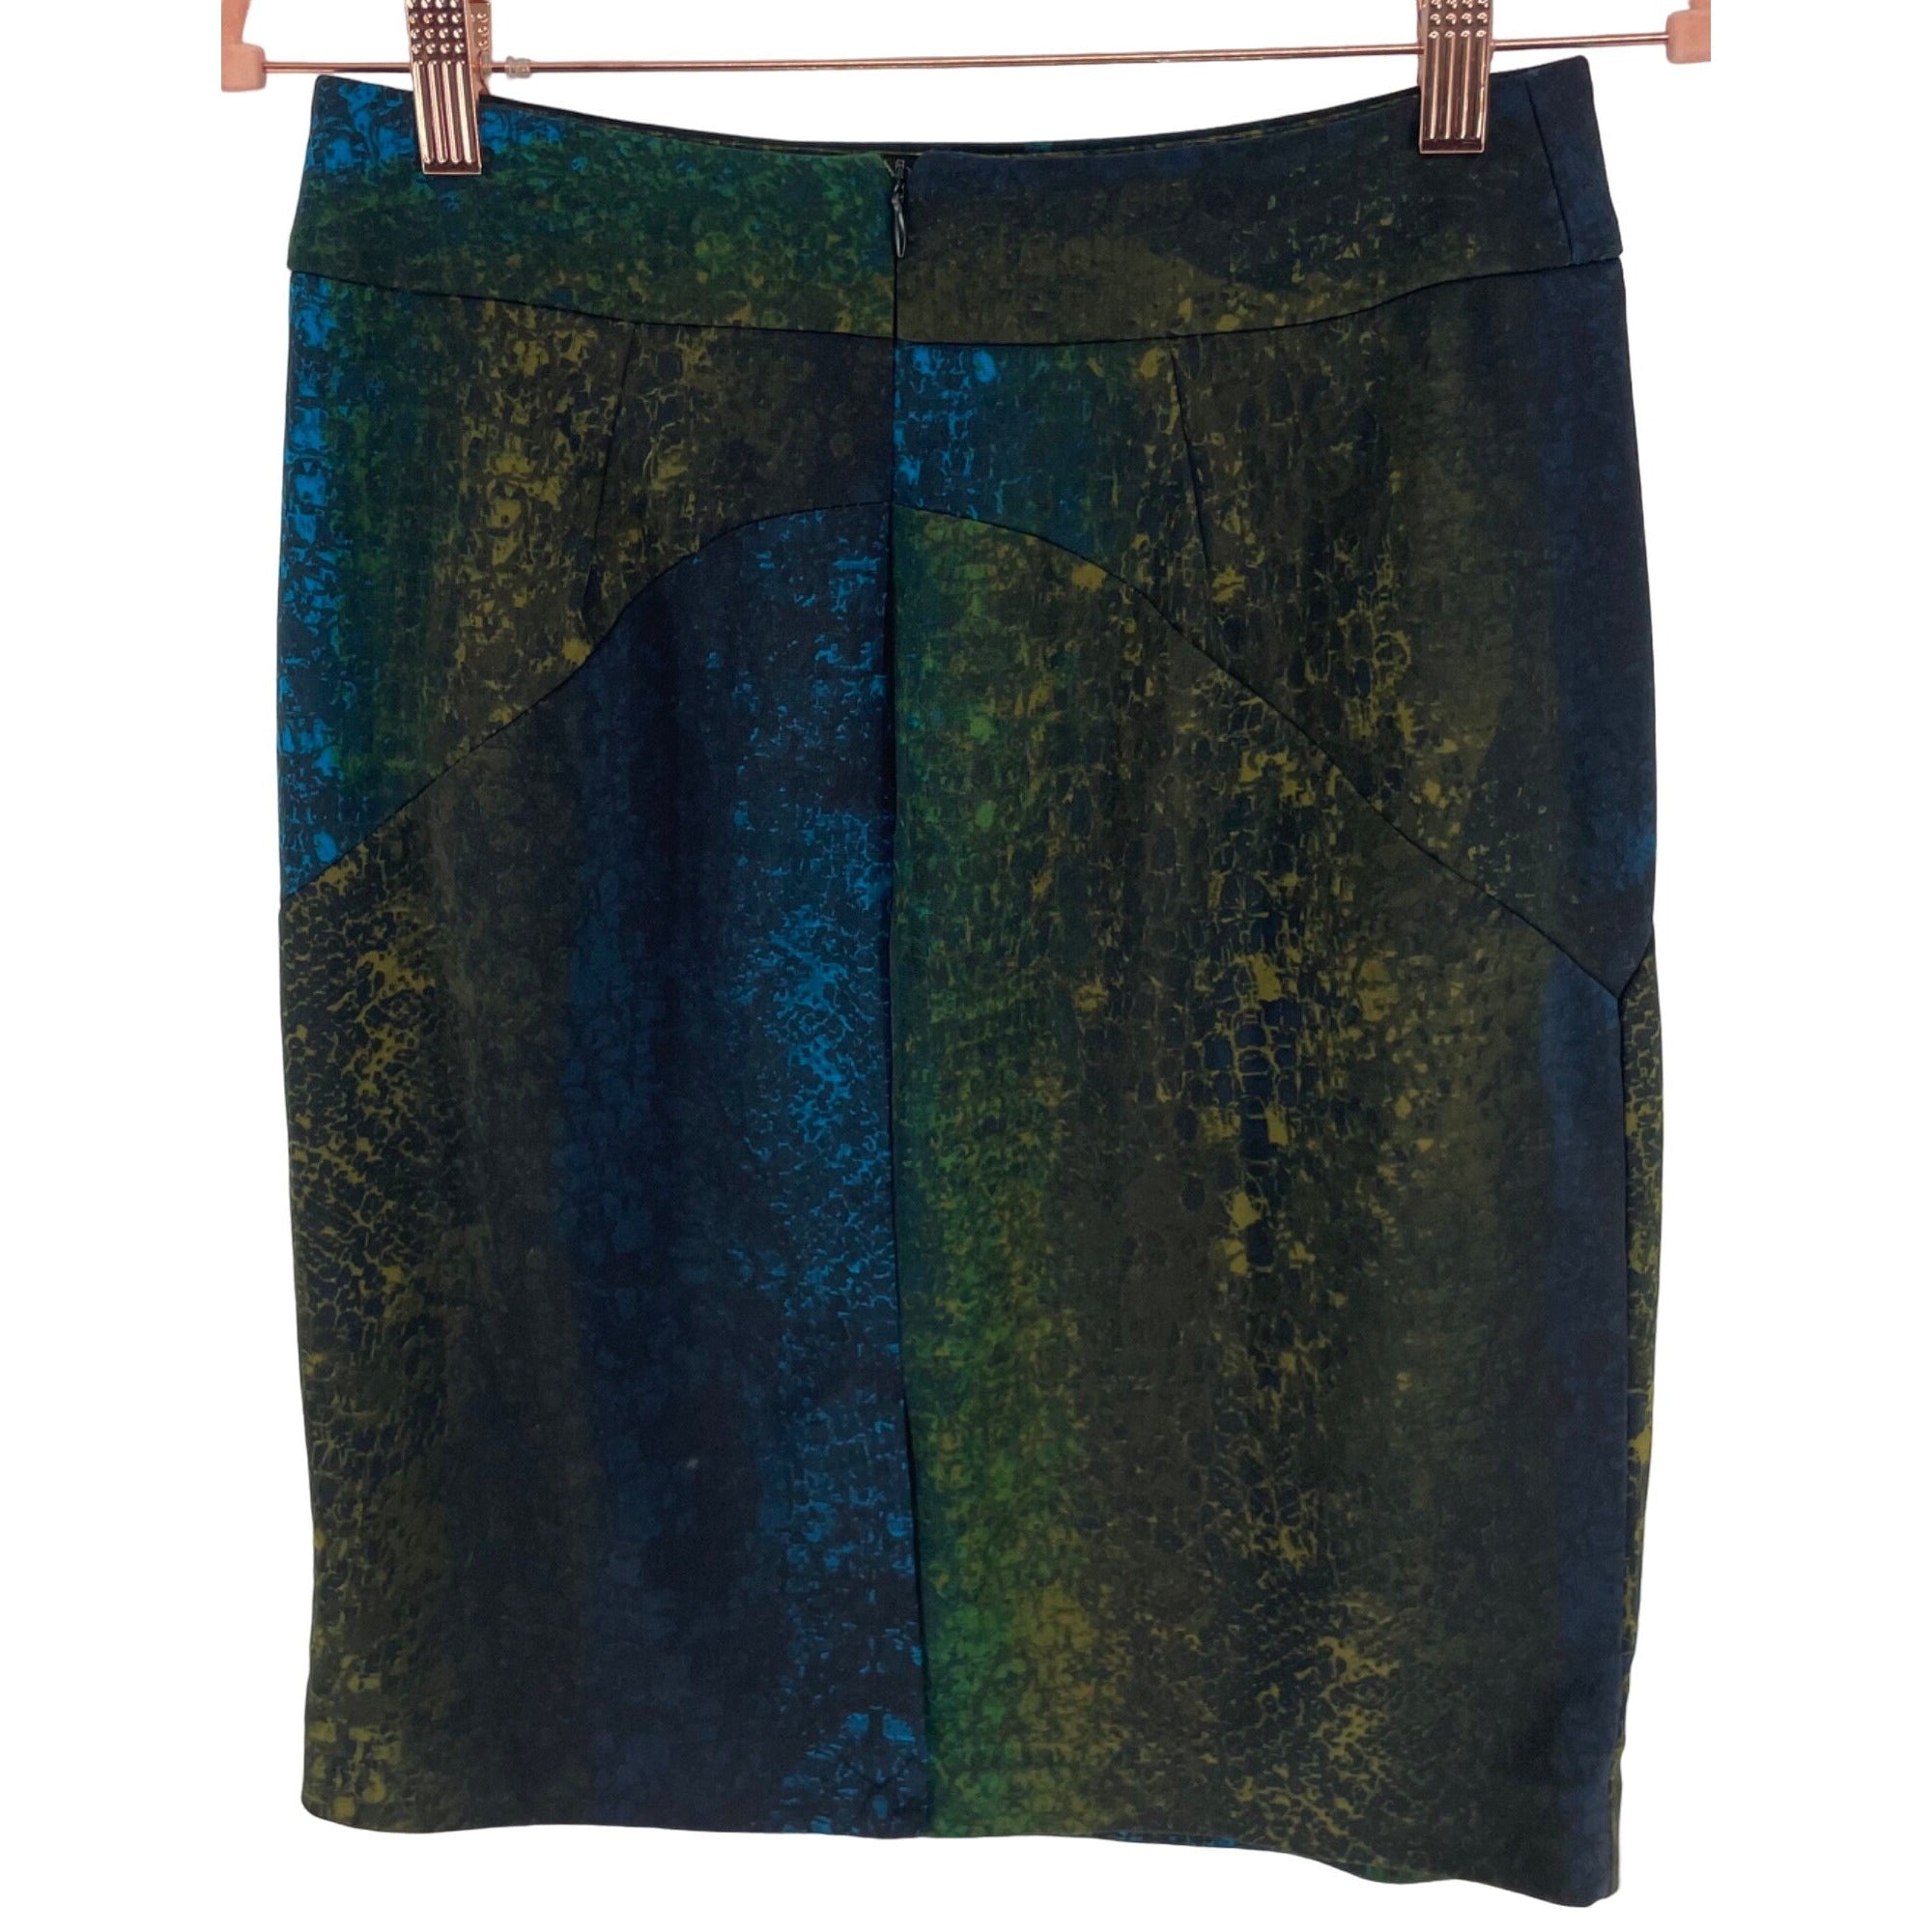 Premise Women's Size 4 Black, Blue & Green Pencil Skirt